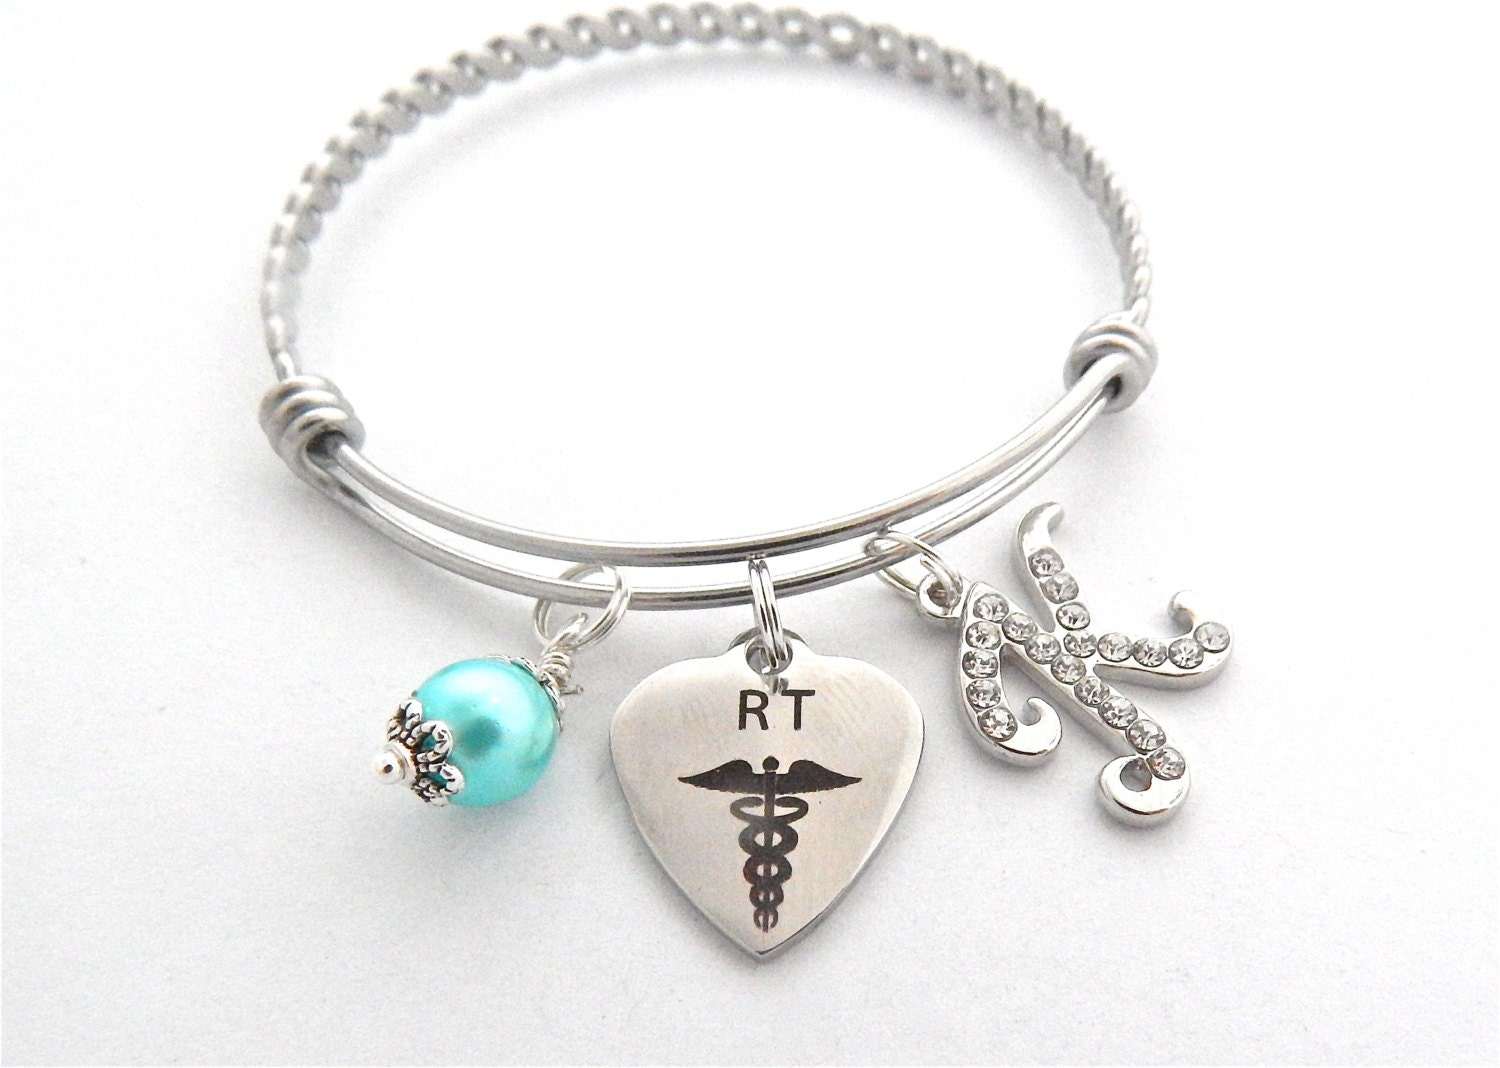 RT Gift, RT Bracelet, Gifts for Respiratory Therapist, RRT Gift, Radiology Tech Bracelet, Coworker Gift, Medical School Graduation Gifts